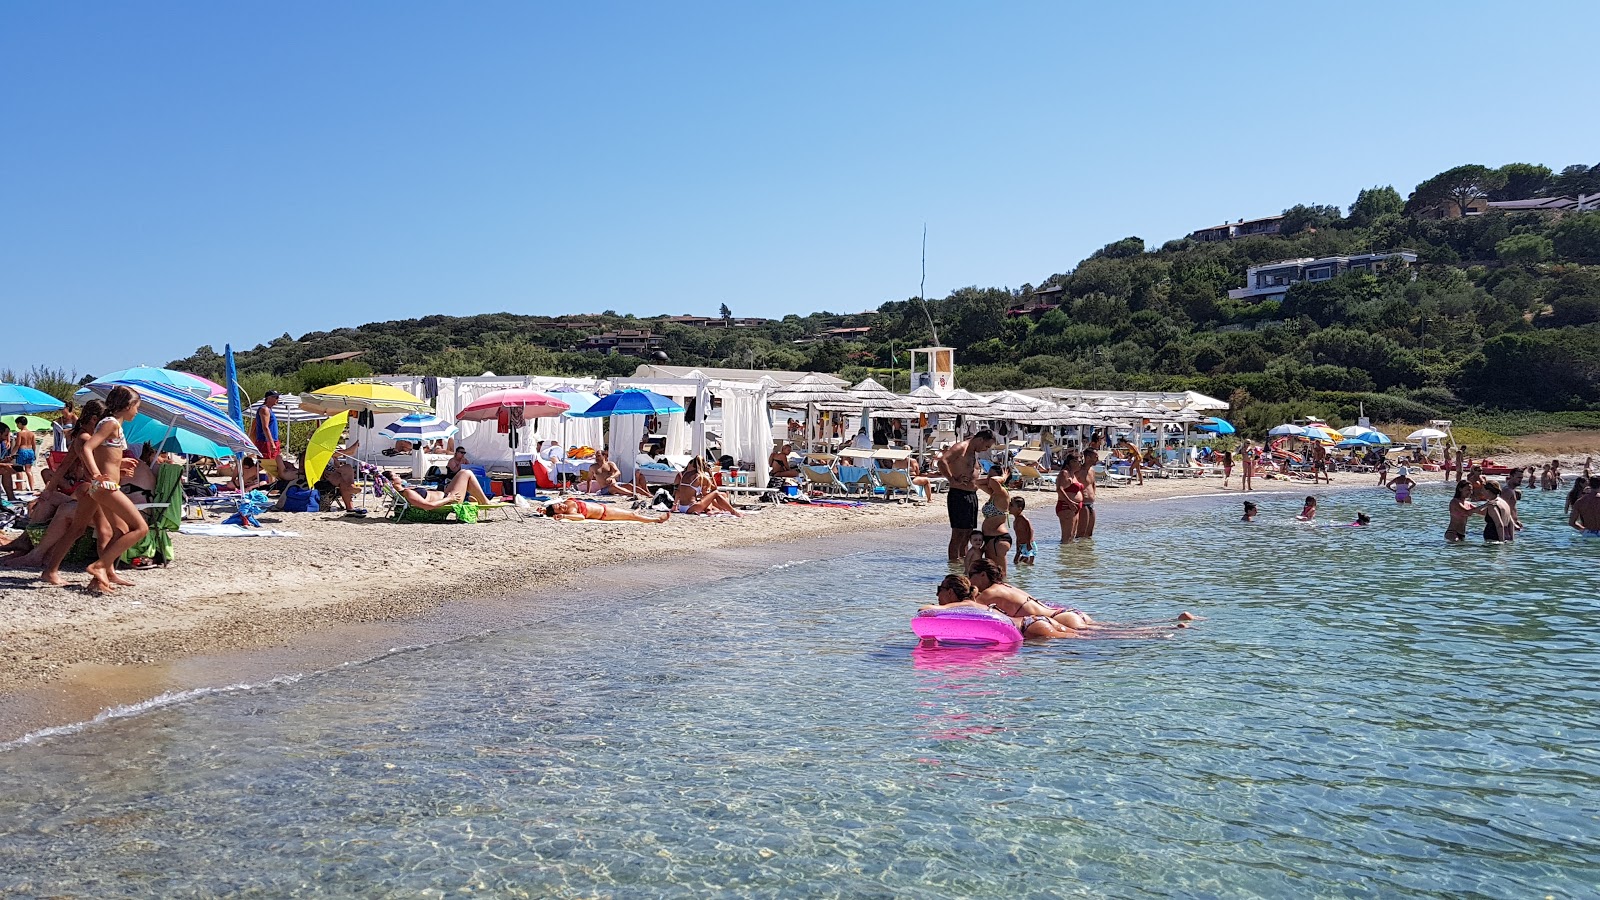 Foto van Spiaggia dei Sassi met hoog niveau van netheid